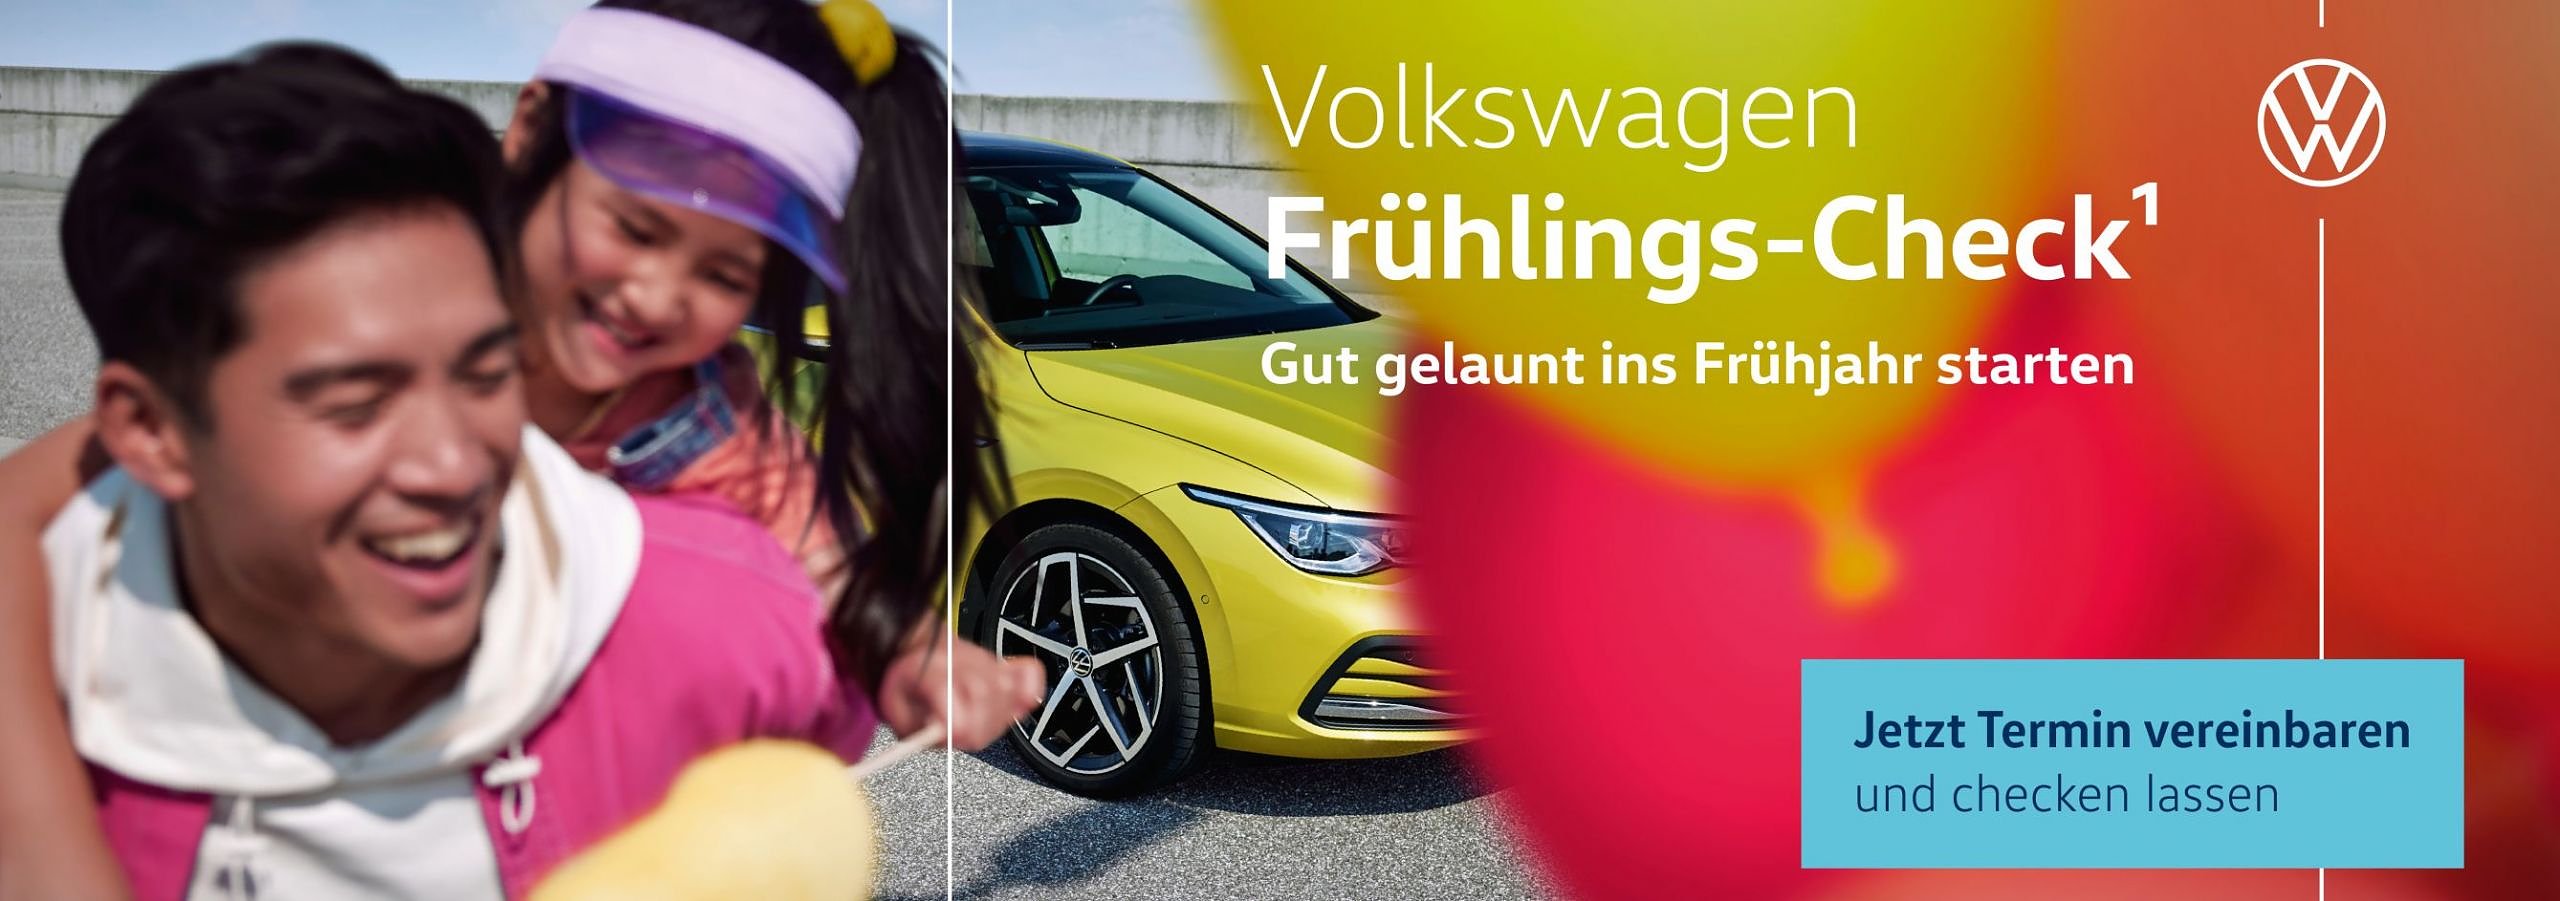 Volkswagen Frühlings-Check¹